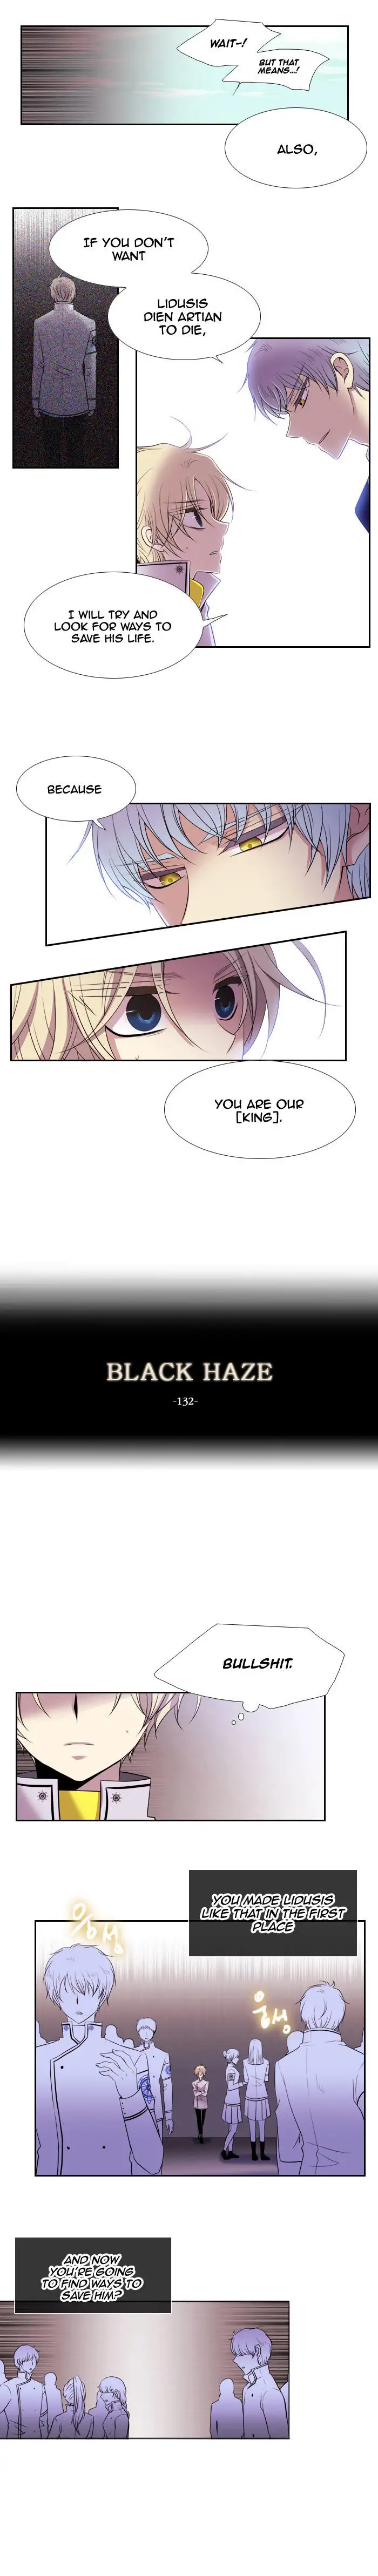 Black Haze - Chapter 132 Page 2